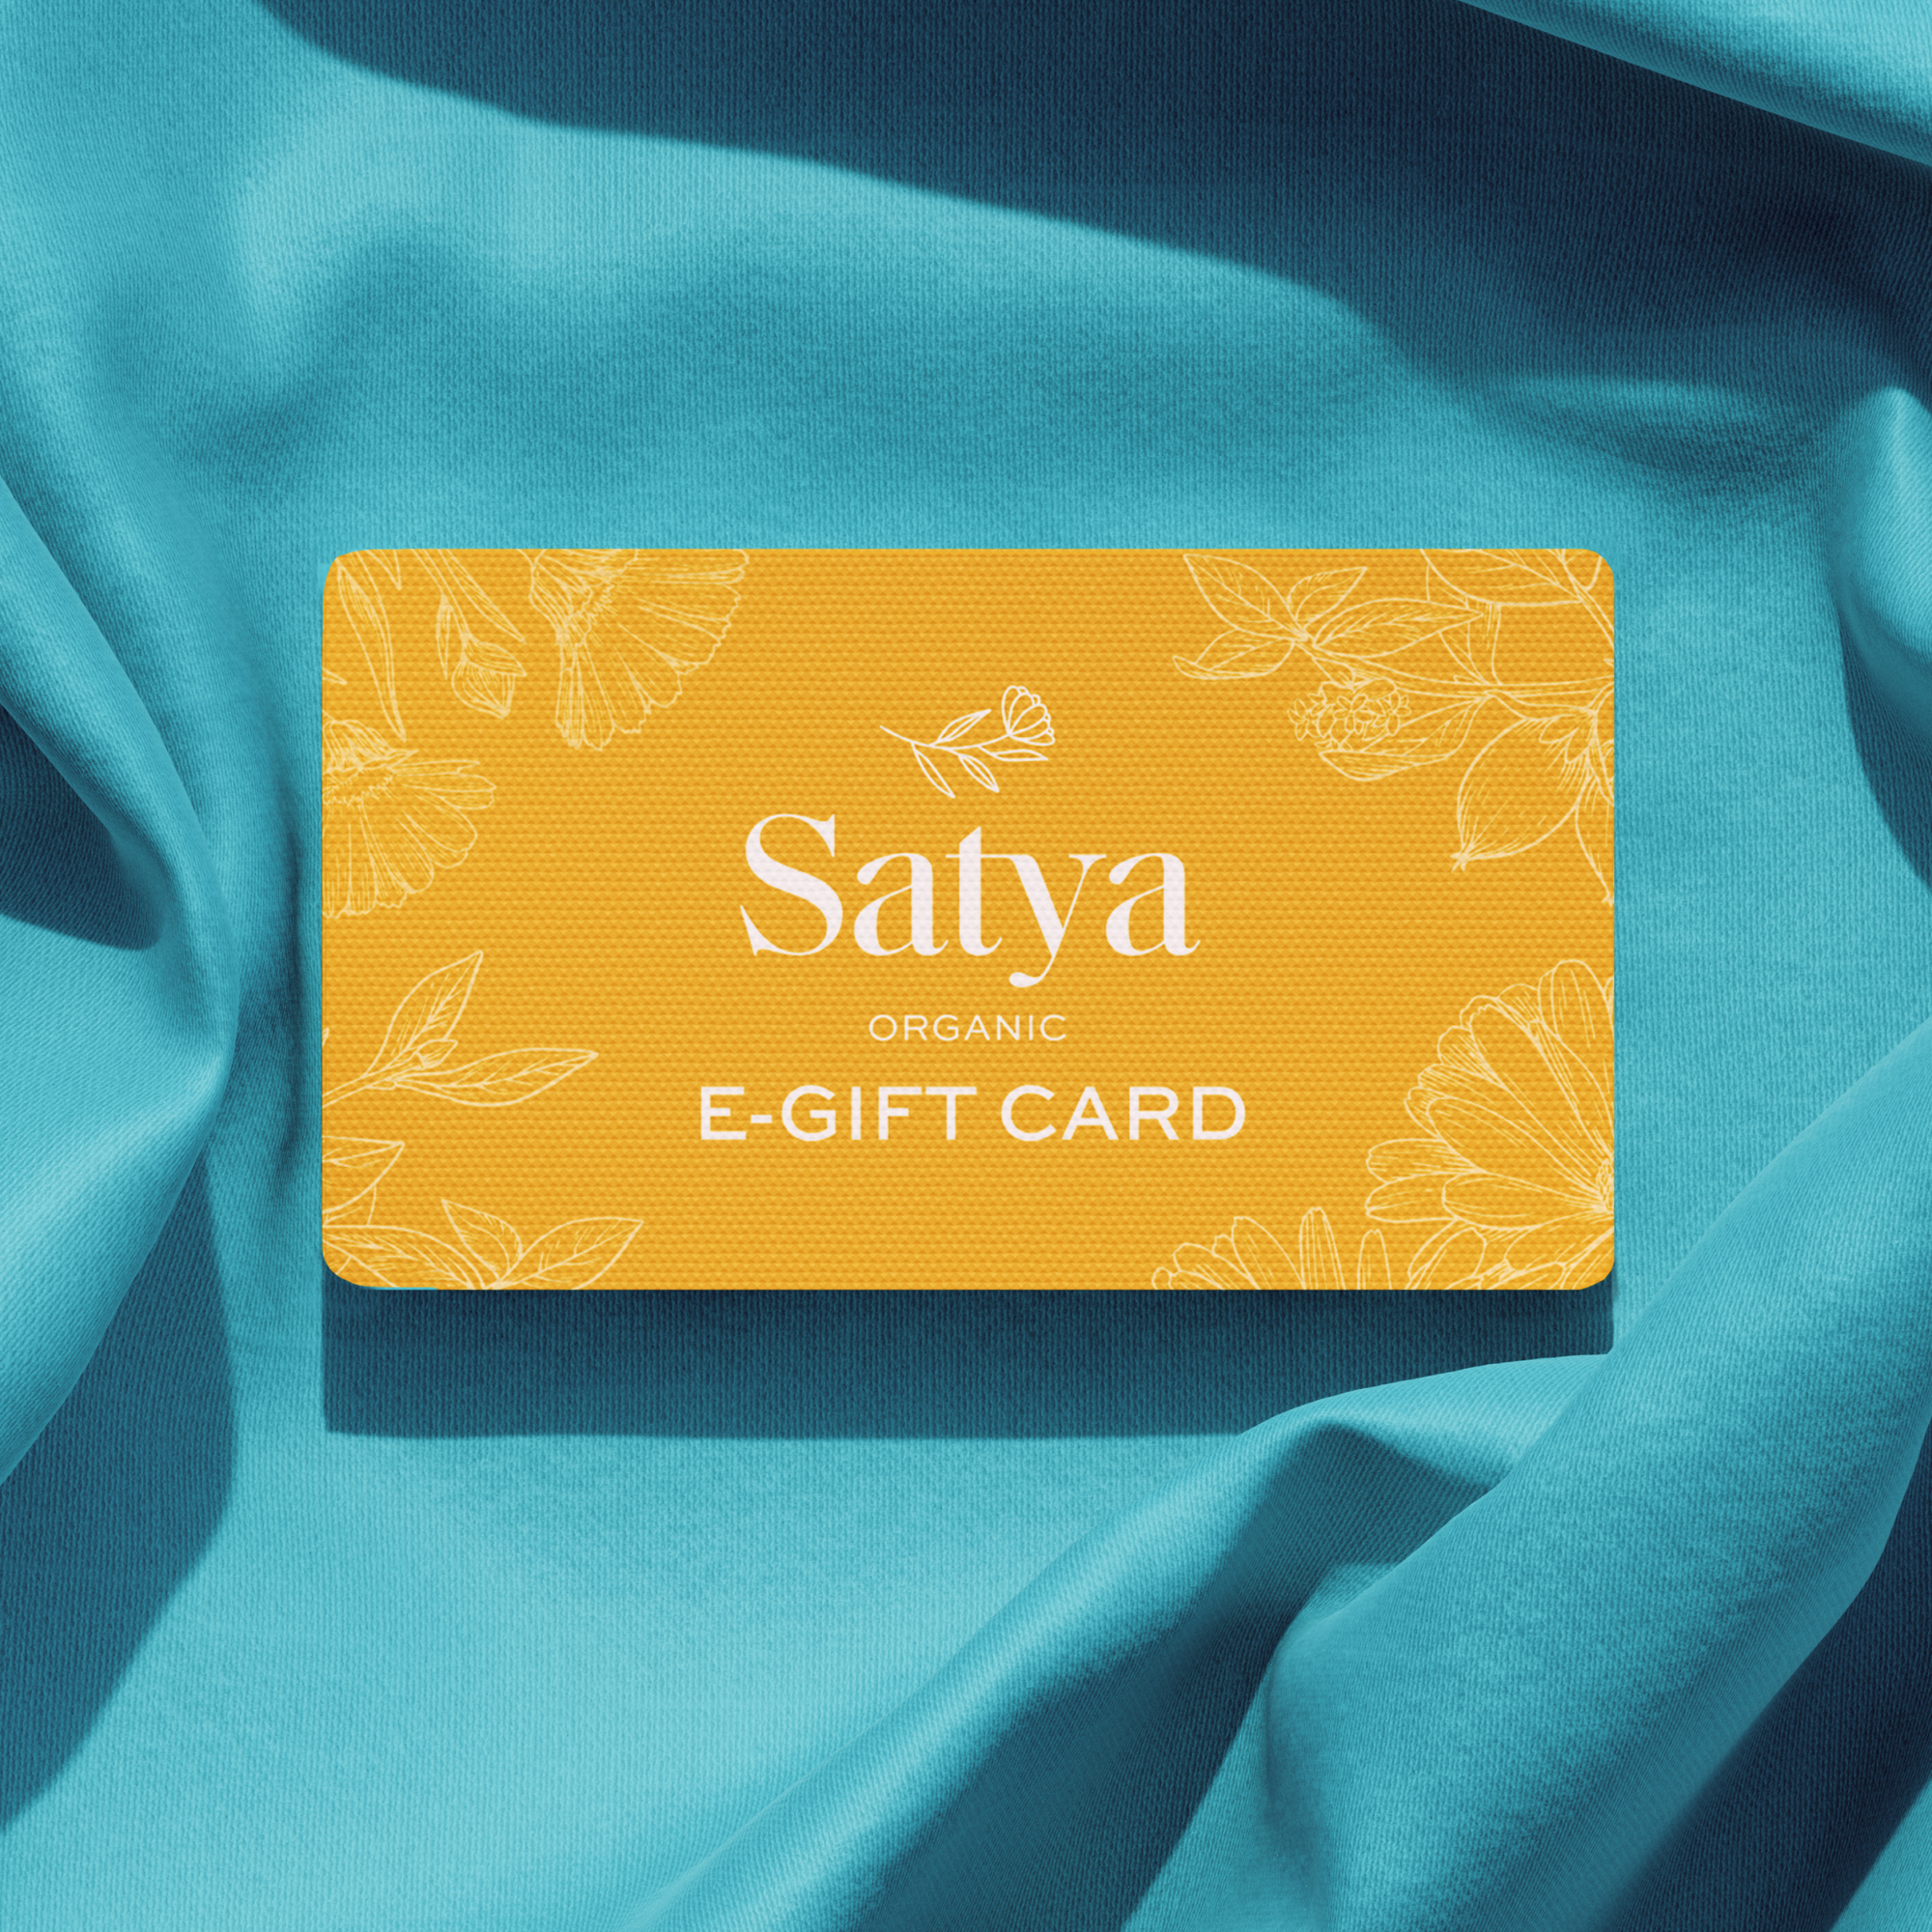 Satya Organic E-Gify Card on a blue cloth